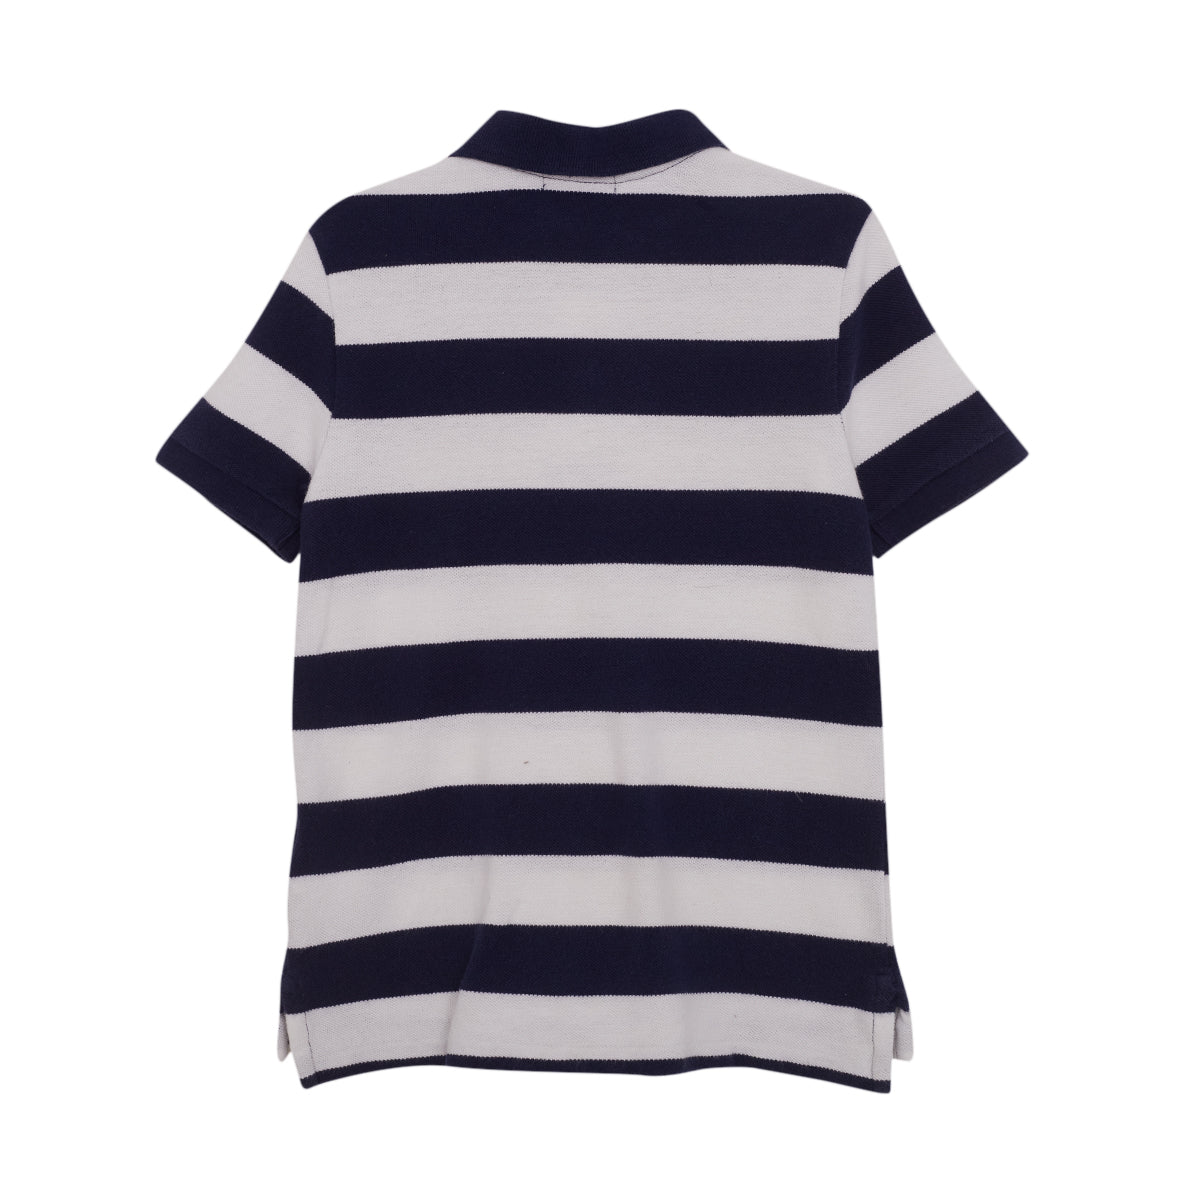 Camiseta Polo Ralph Lauren Listrada Infantil Tam.5